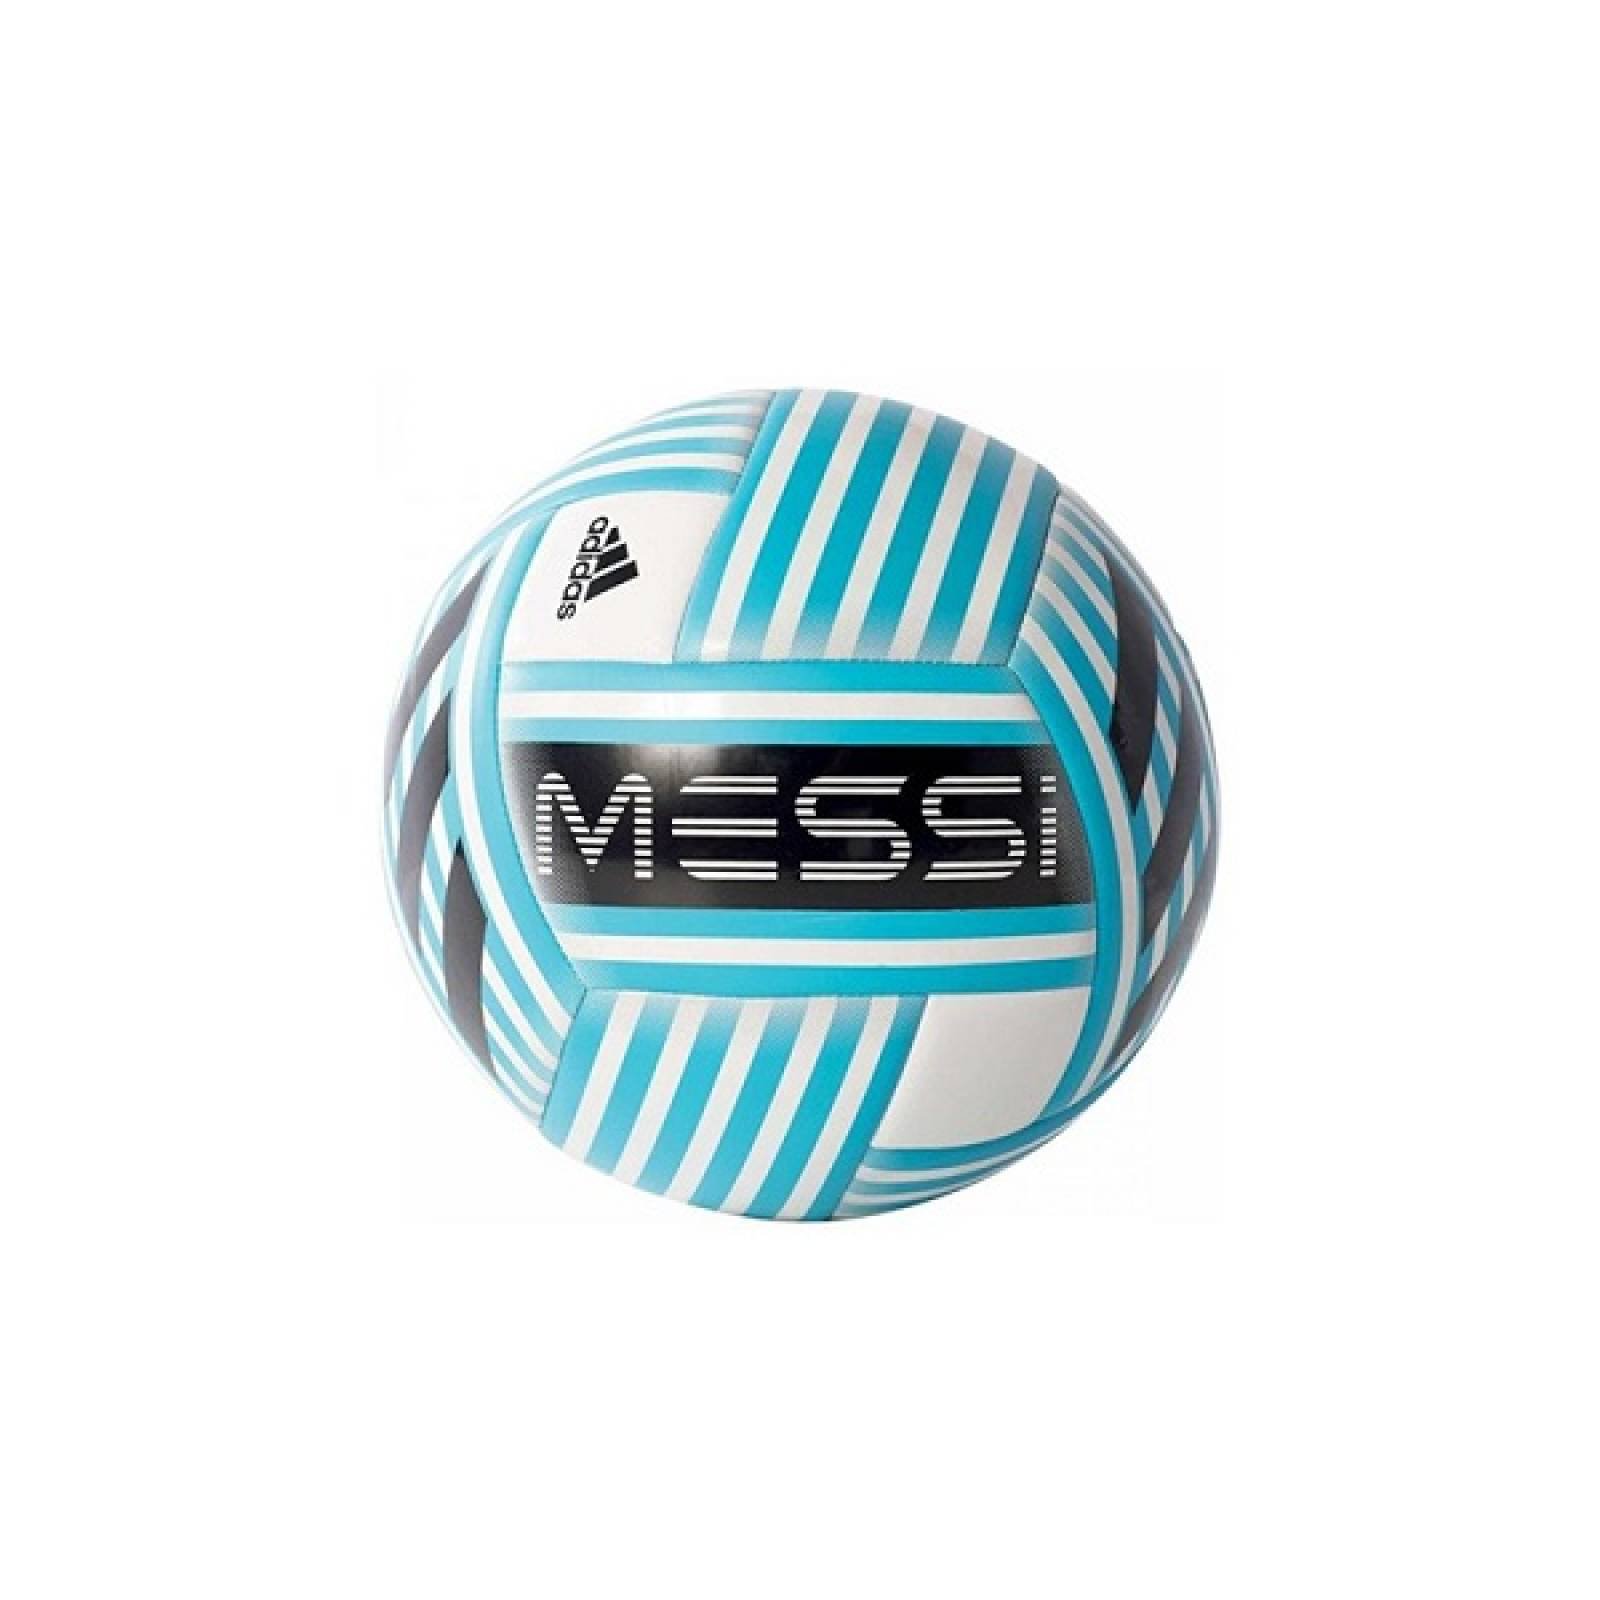 Balon Adidas Messi Glider Fw17 No.5